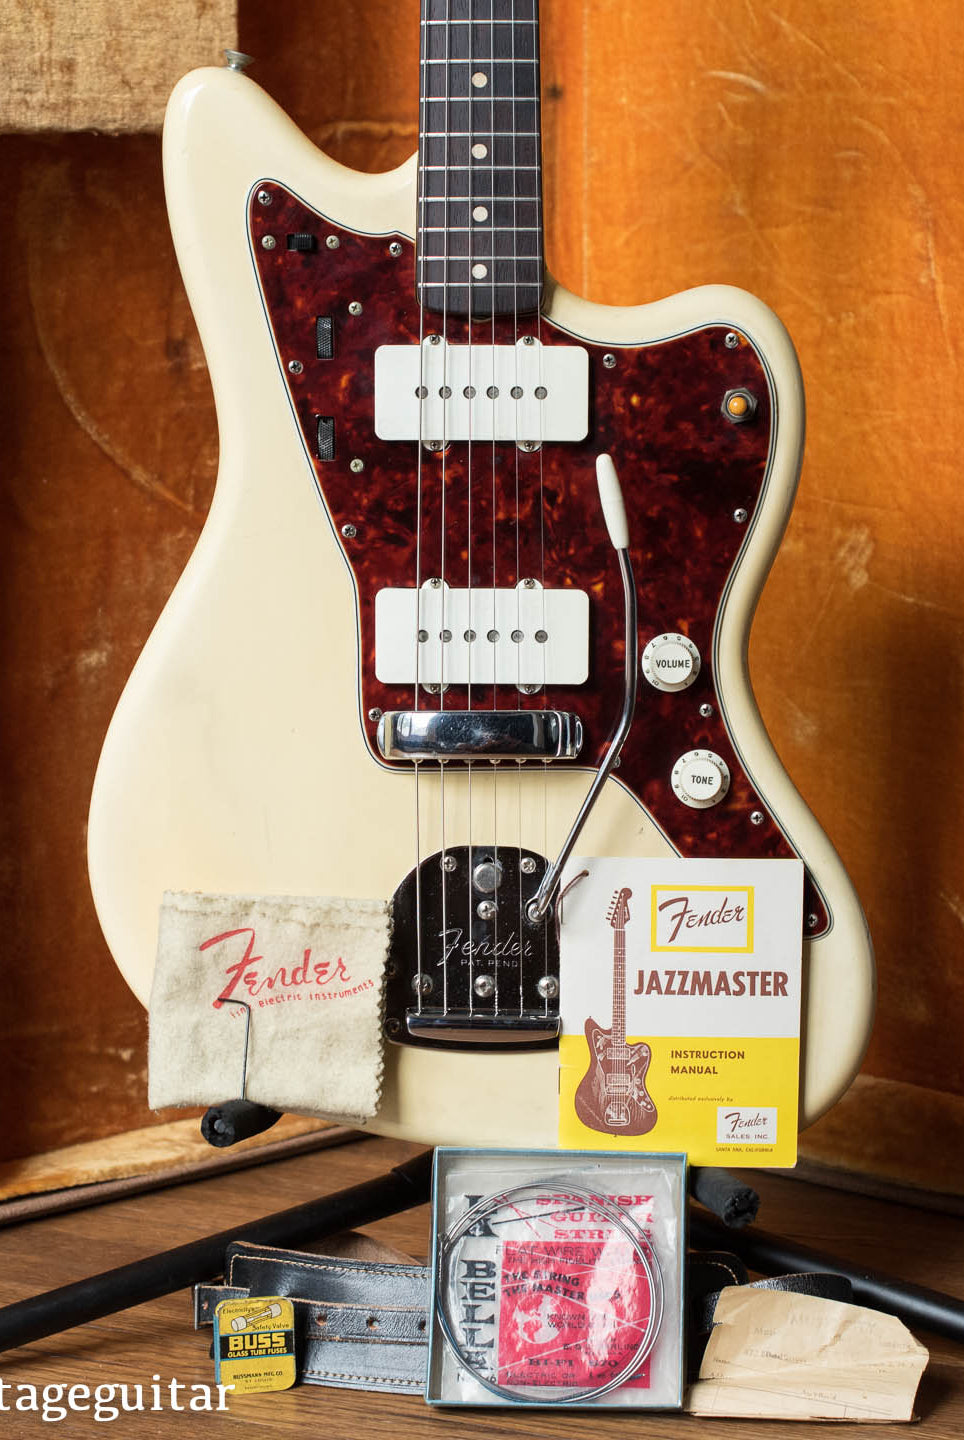 Vintage 1960 Fender Jazzmaster Blond Blonde guitar